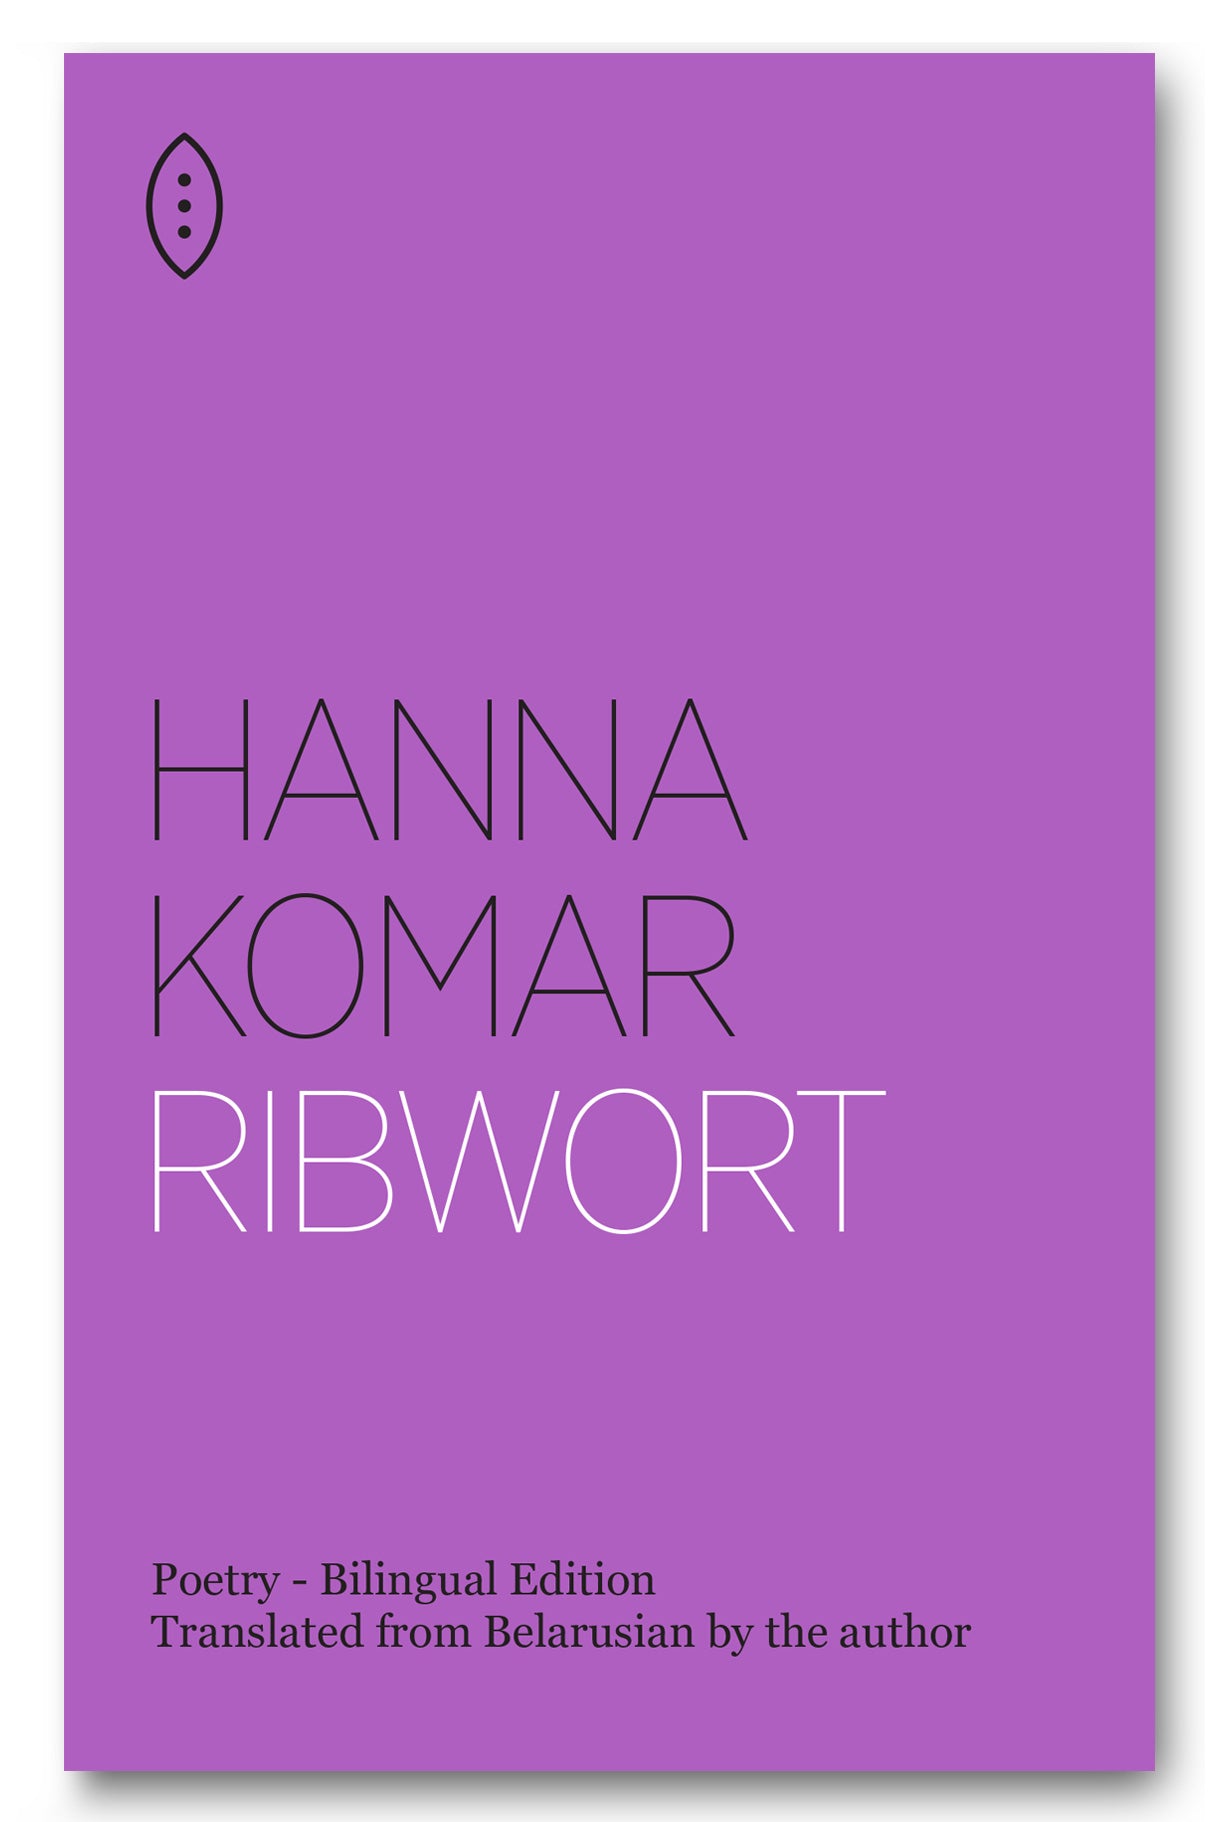 Hanna Komar - Ribwort